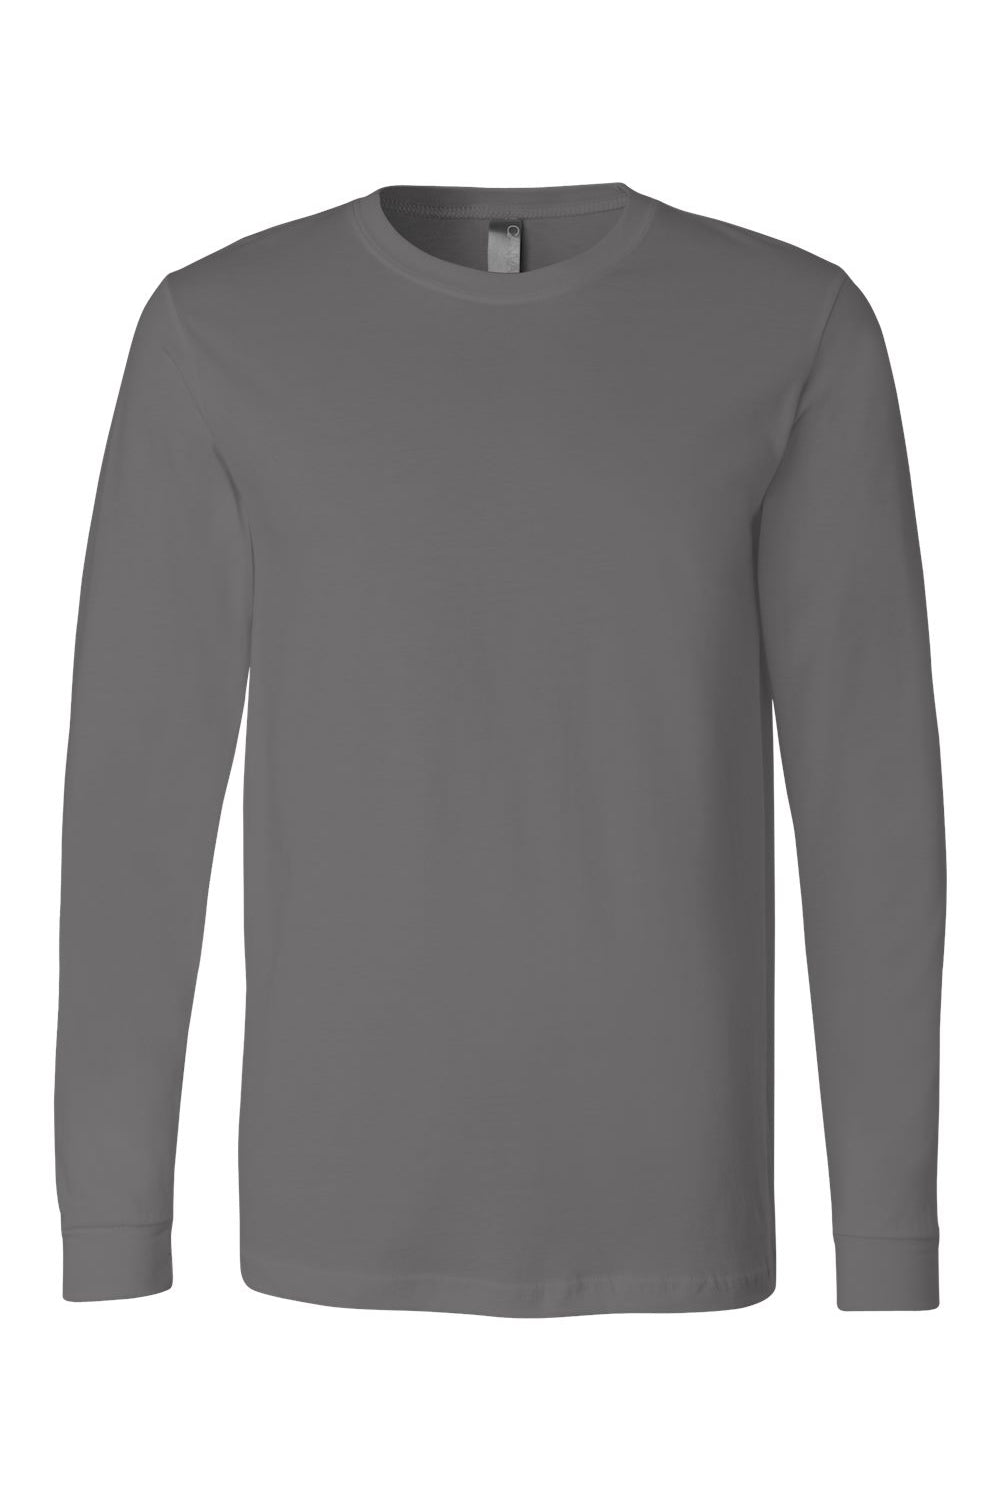 Bella + Canvas BC3501/3501 Mens Jersey Long Sleeve Crewneck T-Shirt Asphalt Grey Flat Front